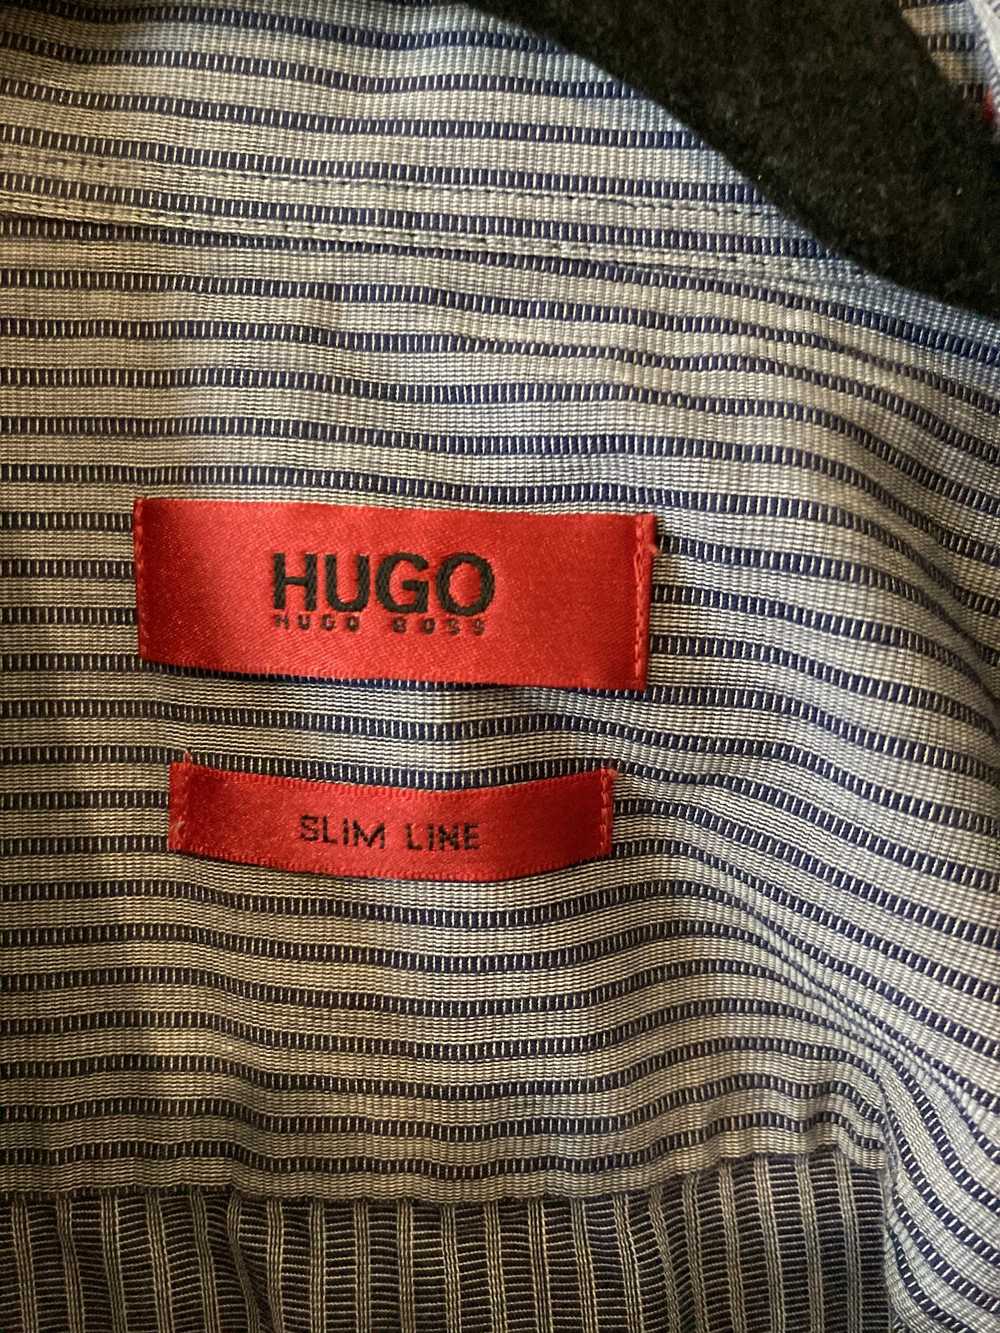 Hugo Boss Hugo Boss charcoal grey striped shirt - image 2